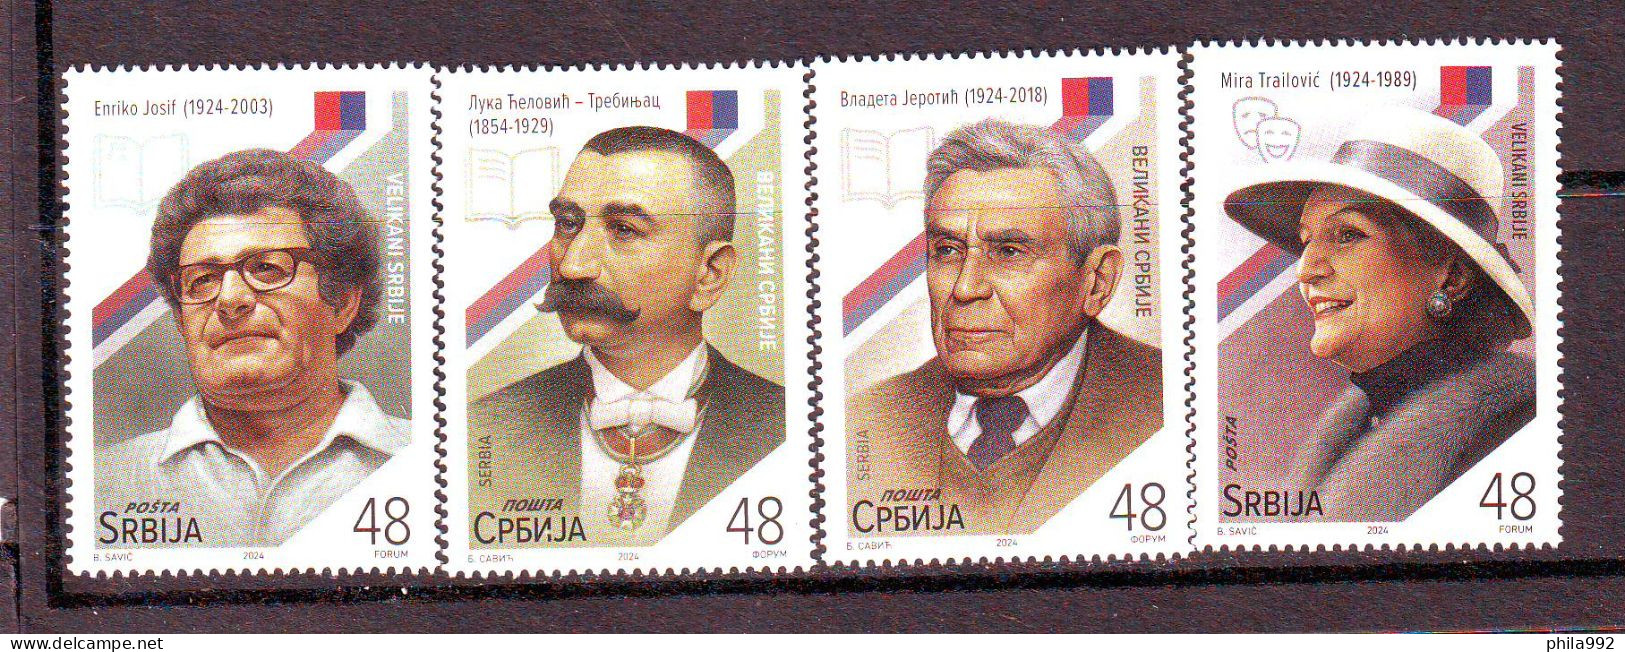 Serbia 2024 Giants Of Serbia (4) Josif, Celovic, Jerotic, Trailovic MNH - Serbia